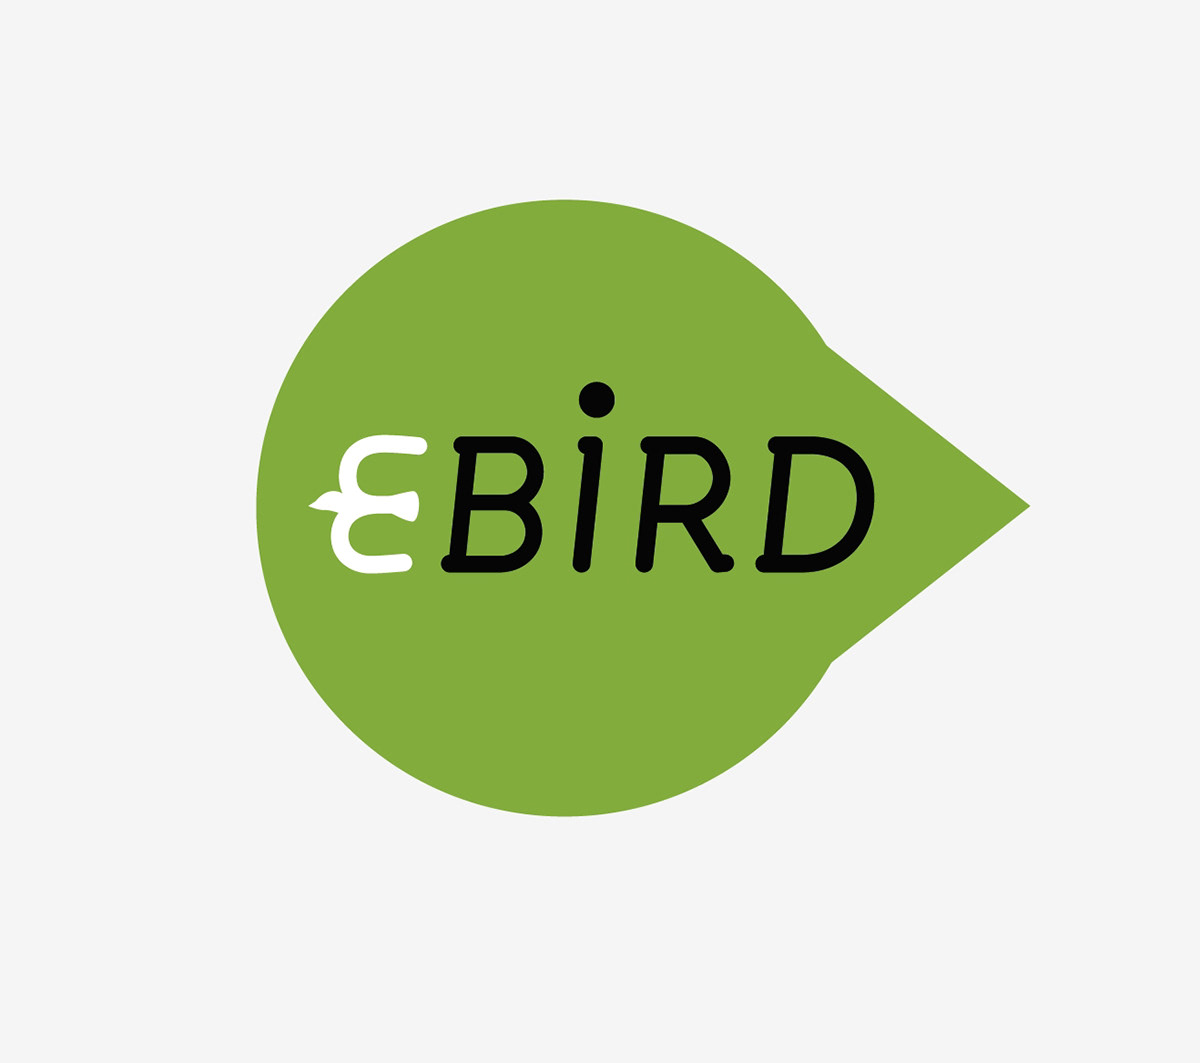 eBird bird Fly Environnement protection logo design minimalist head green black White birdy